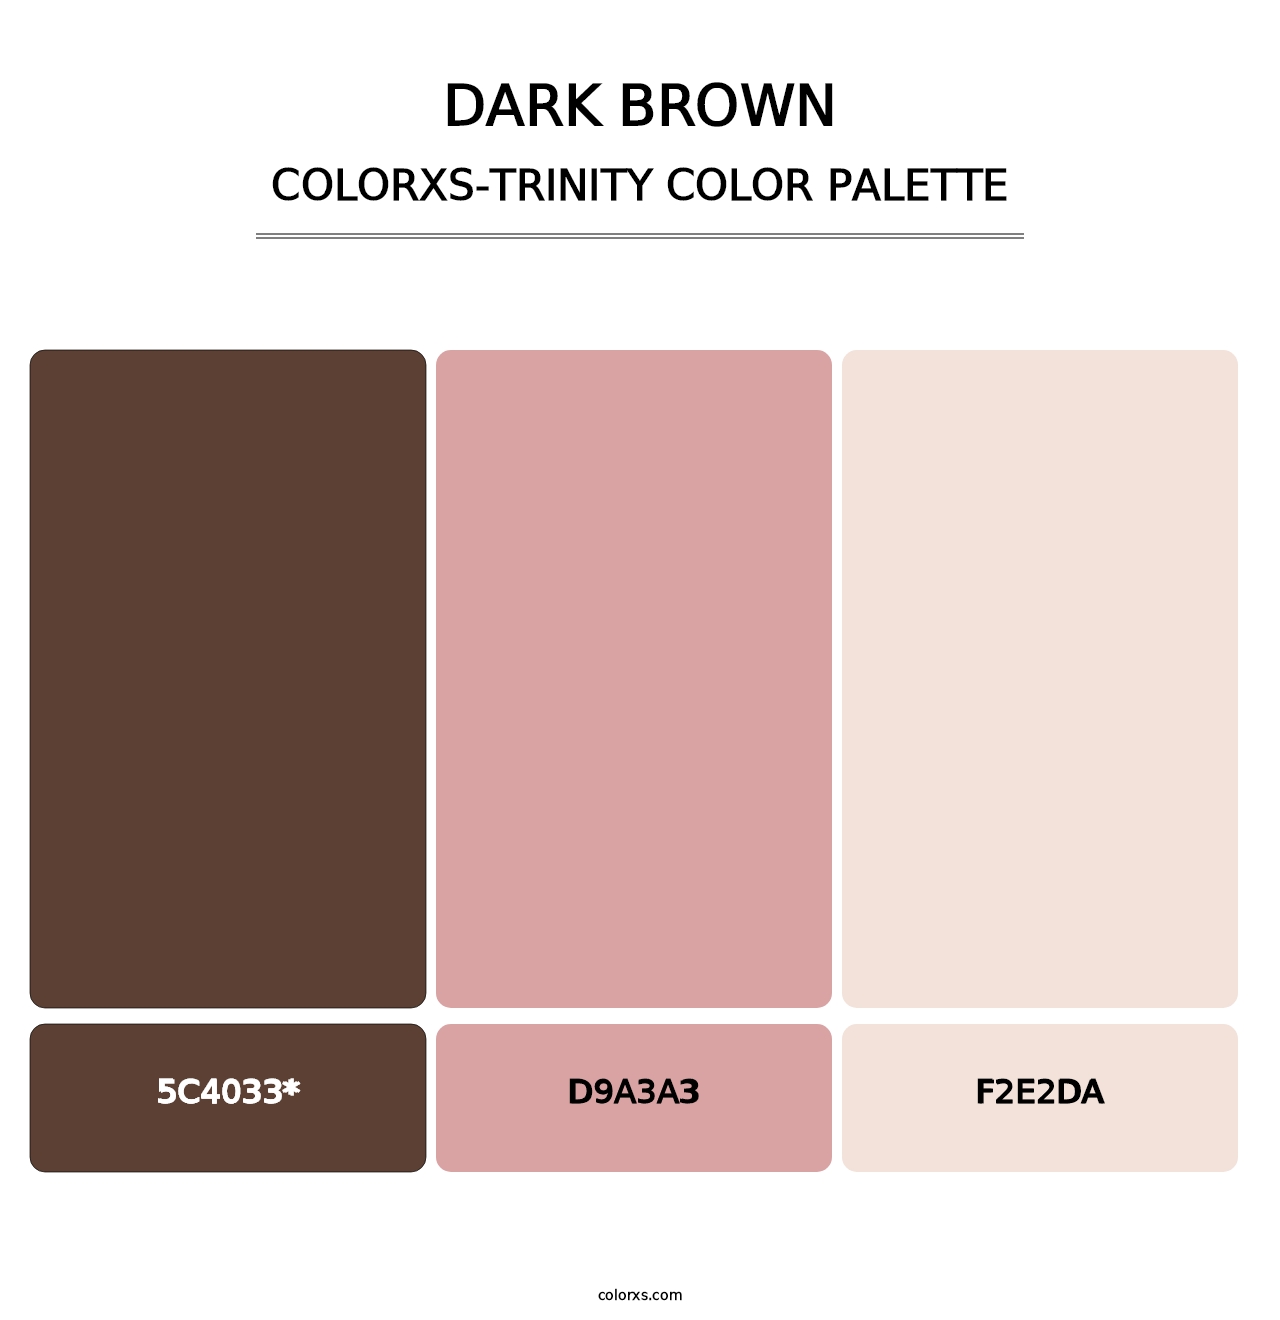 Dark Brown - Colorxs Trinity Palette